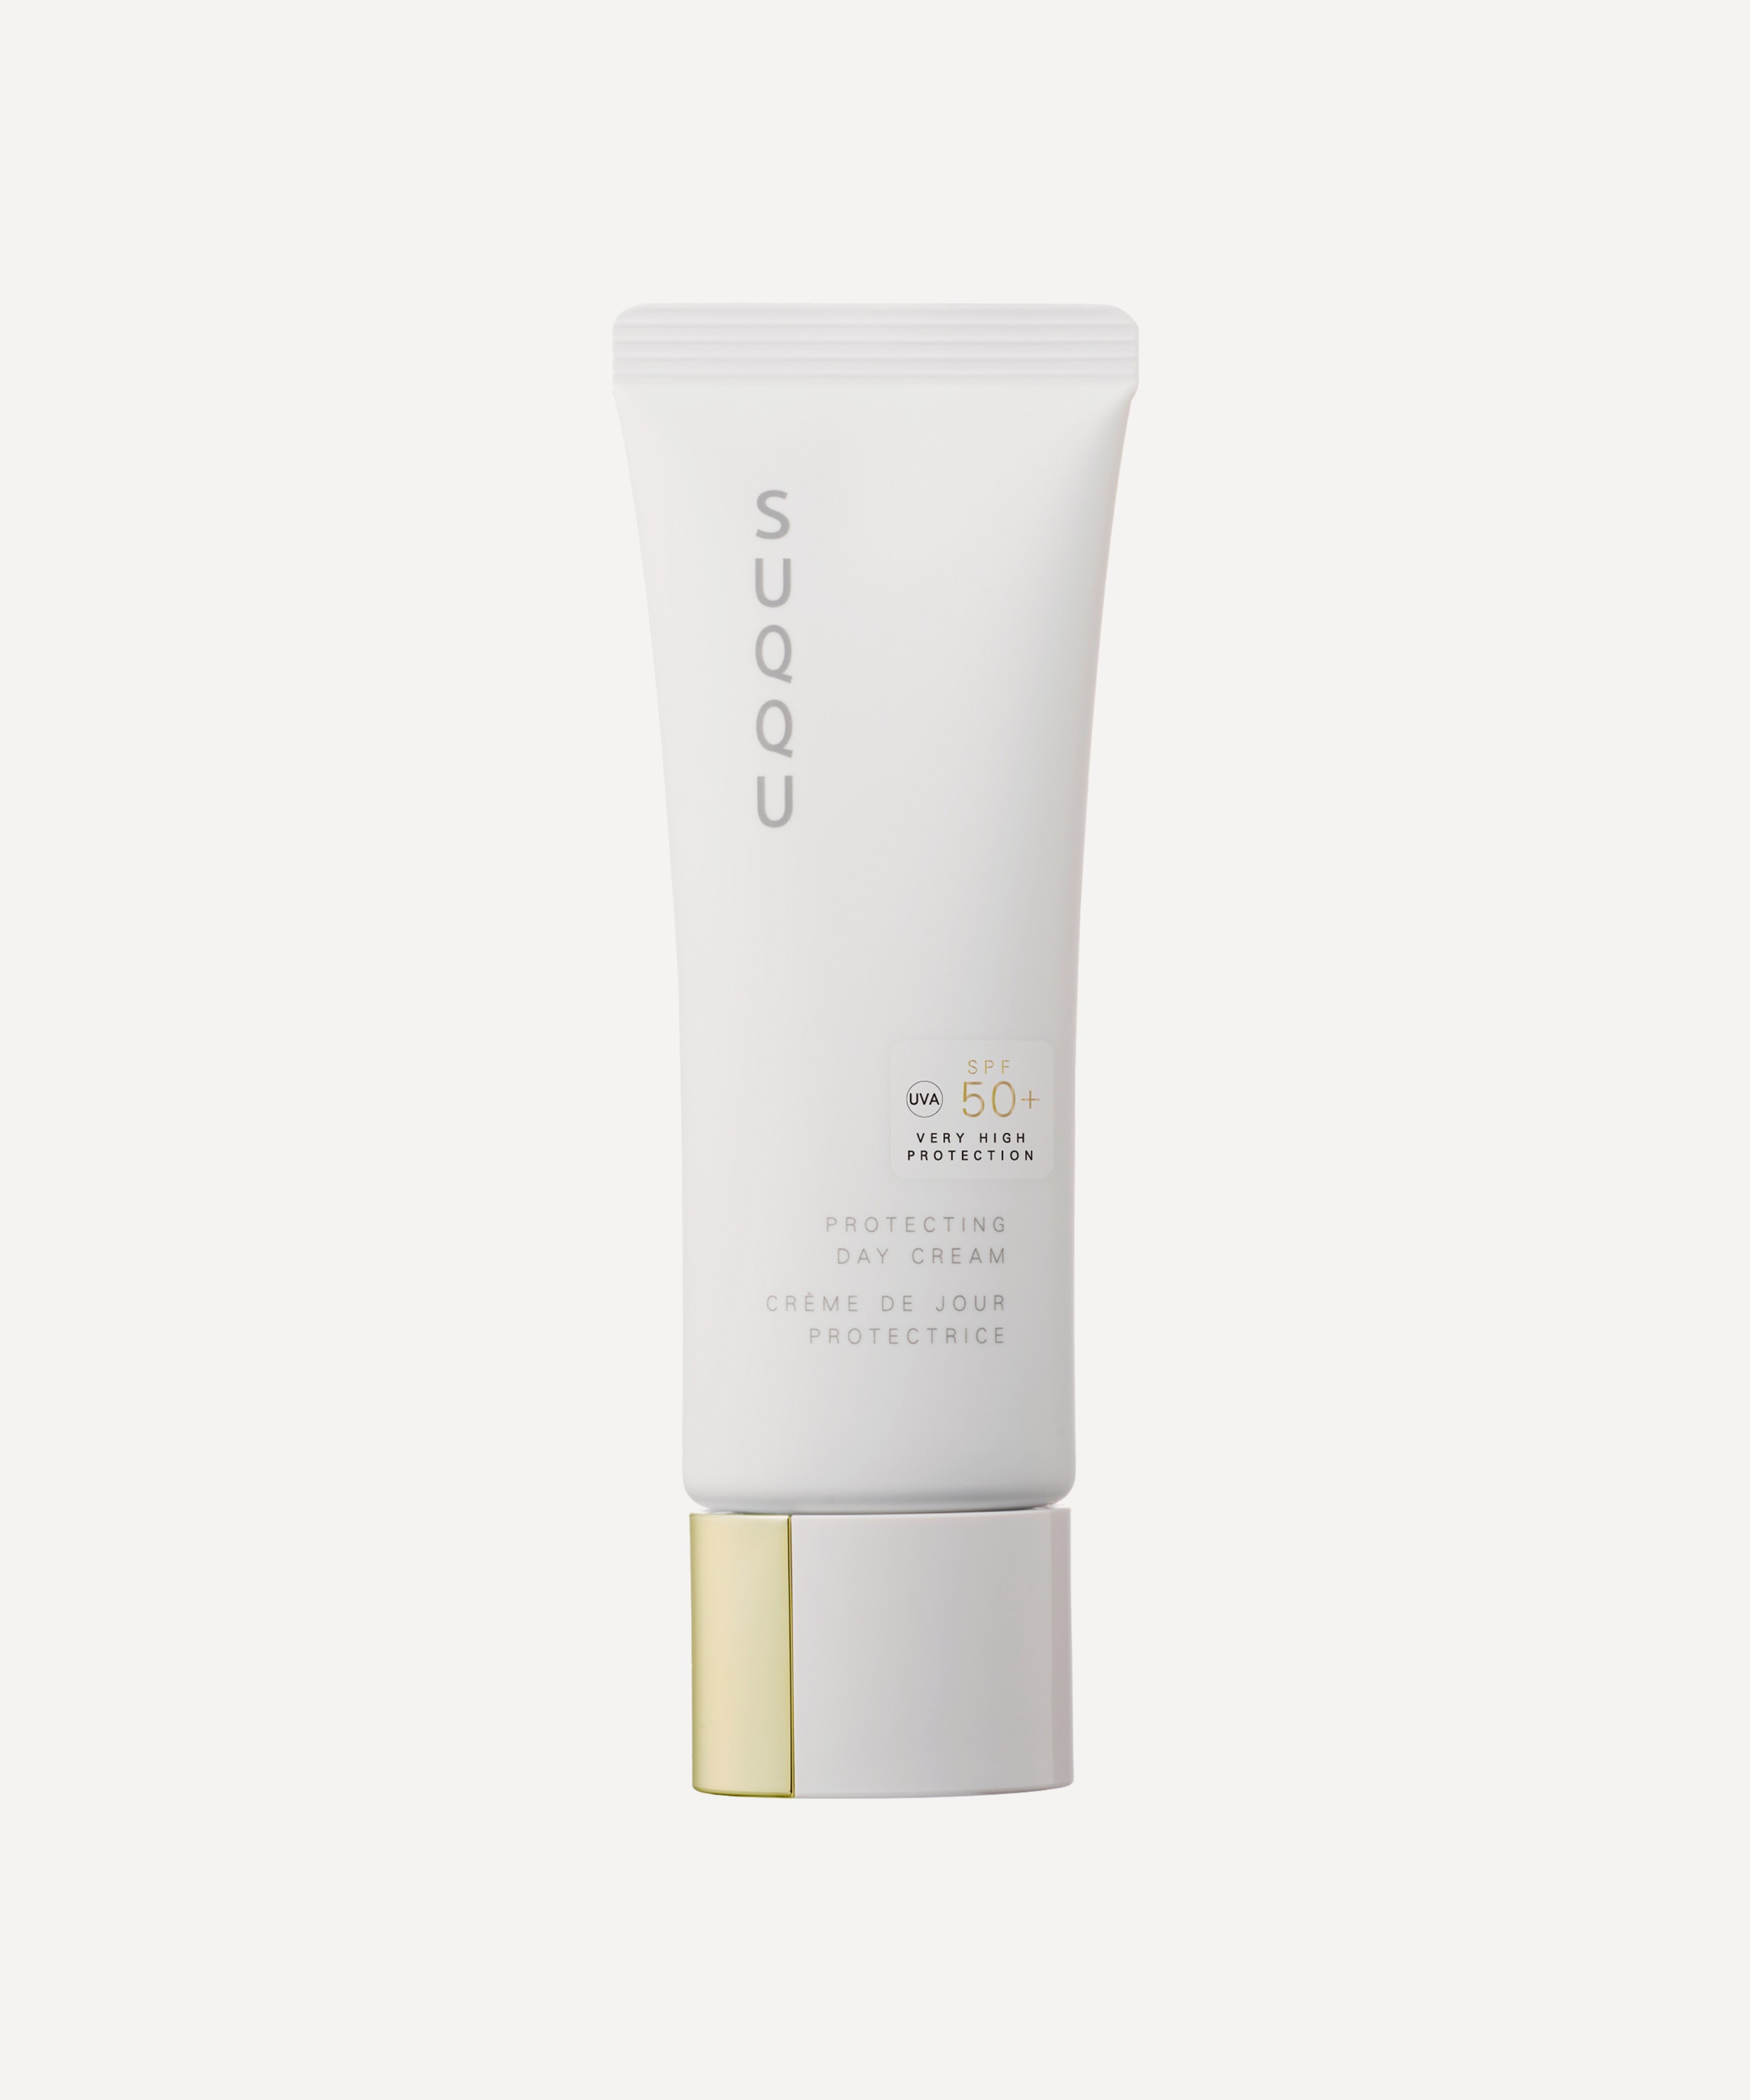 SUQQU - Protecting Day Cream 50g